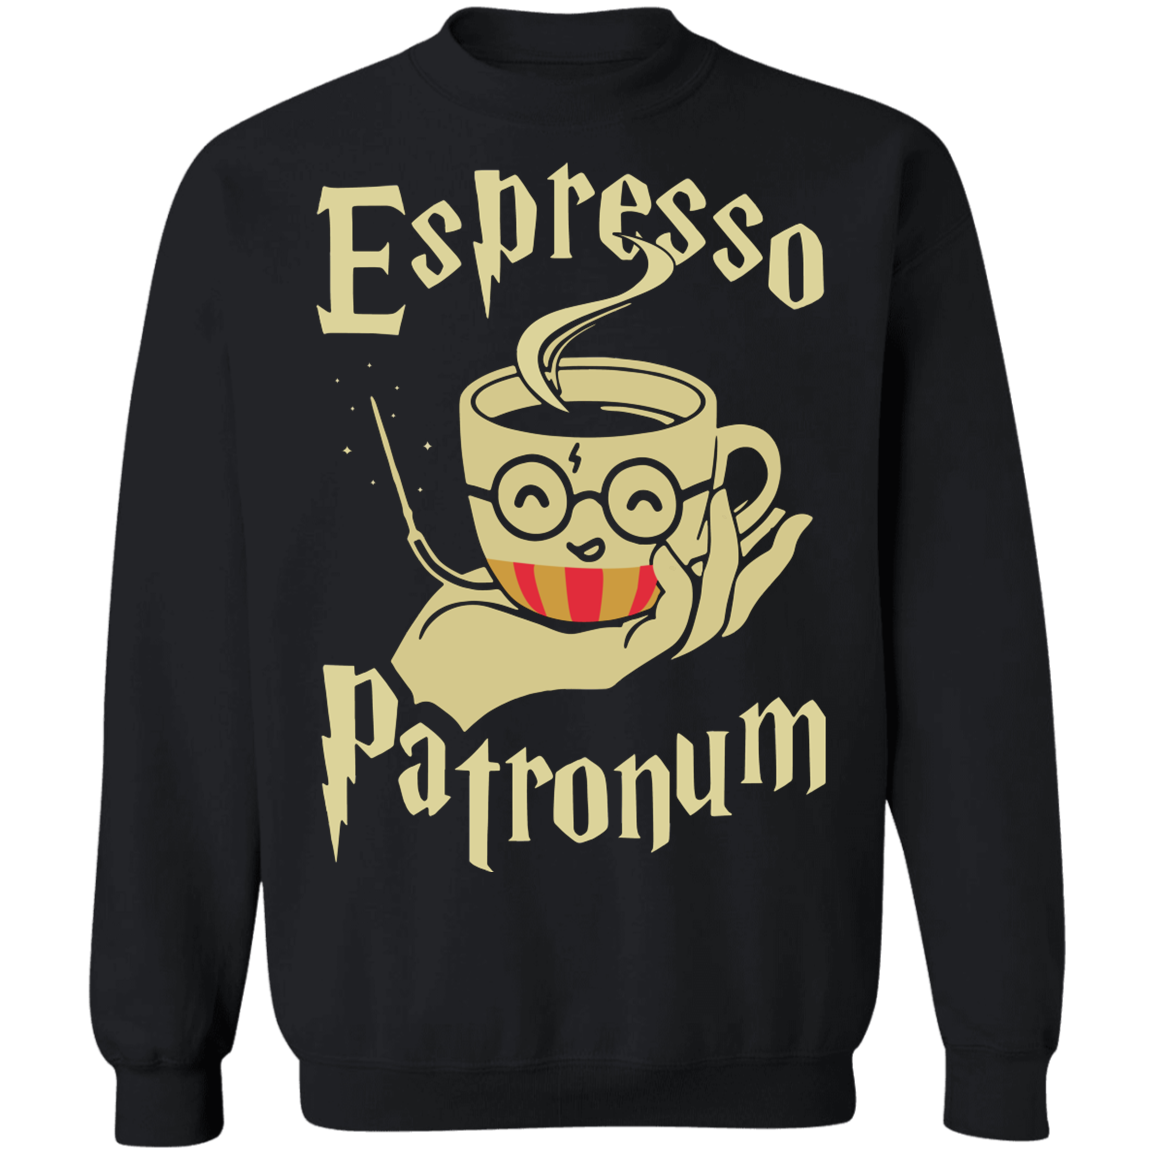 Espresso Patronum Crewneck Pullover Sweatshirt